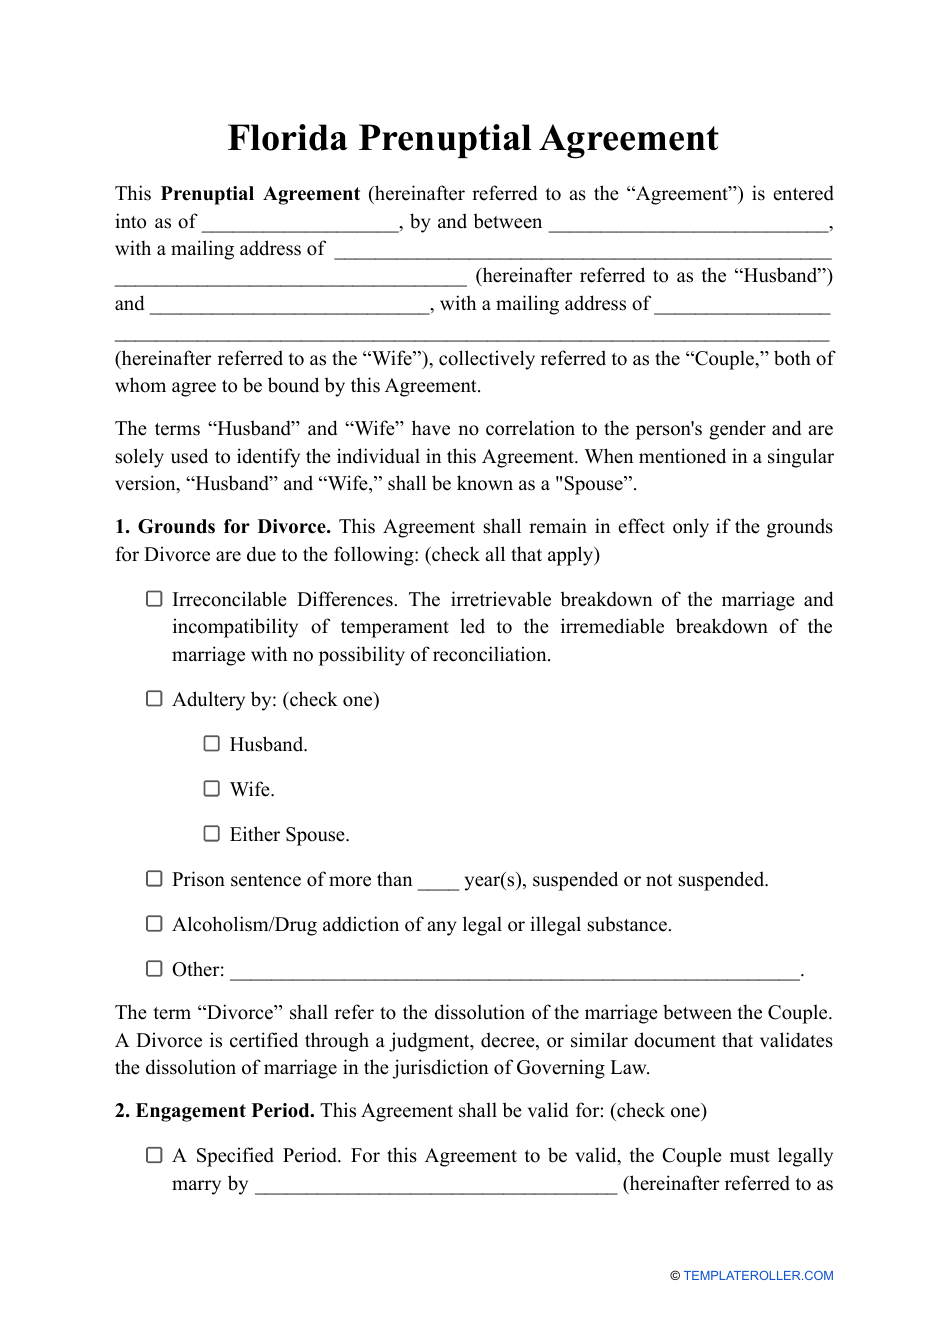 Prenuptial Agreement Template - Florida, Page 1